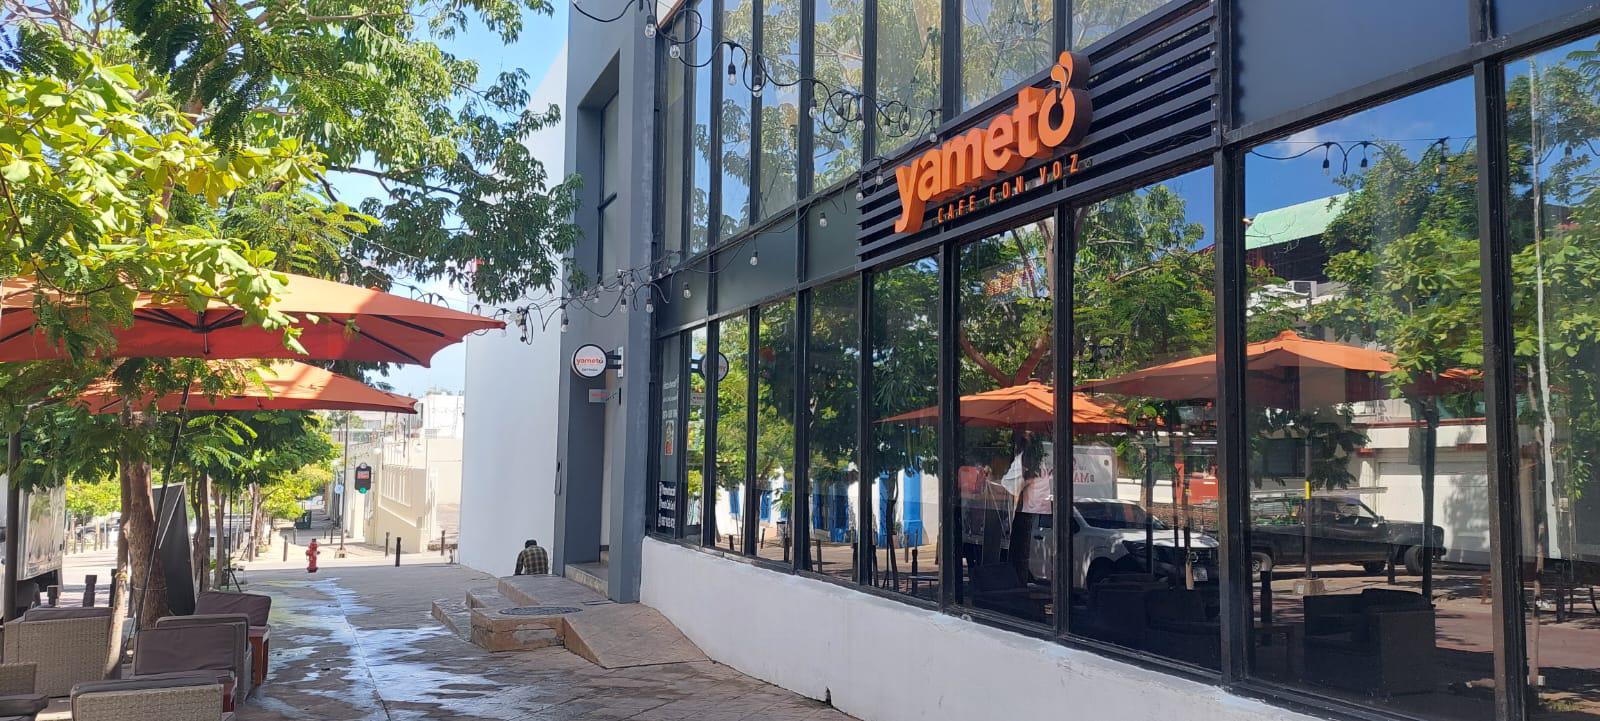 $!Yameto Café, por Ángel Flores 282 Oriente.